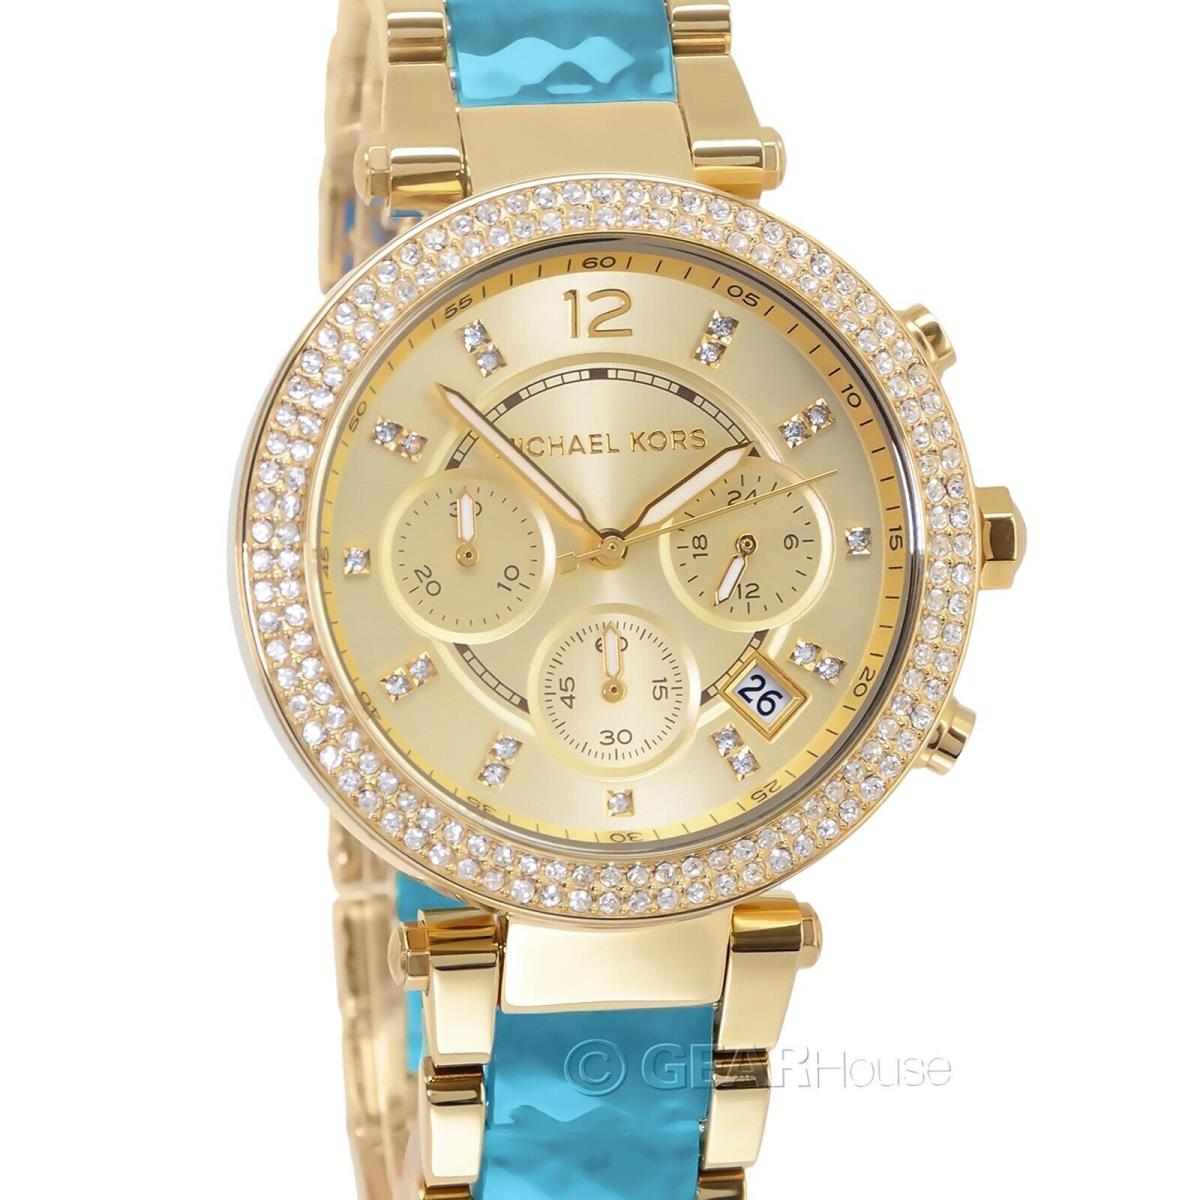 Michael Kors Womens Parker Chronograph Watch Gold Aqua Acrylic Band Crystals